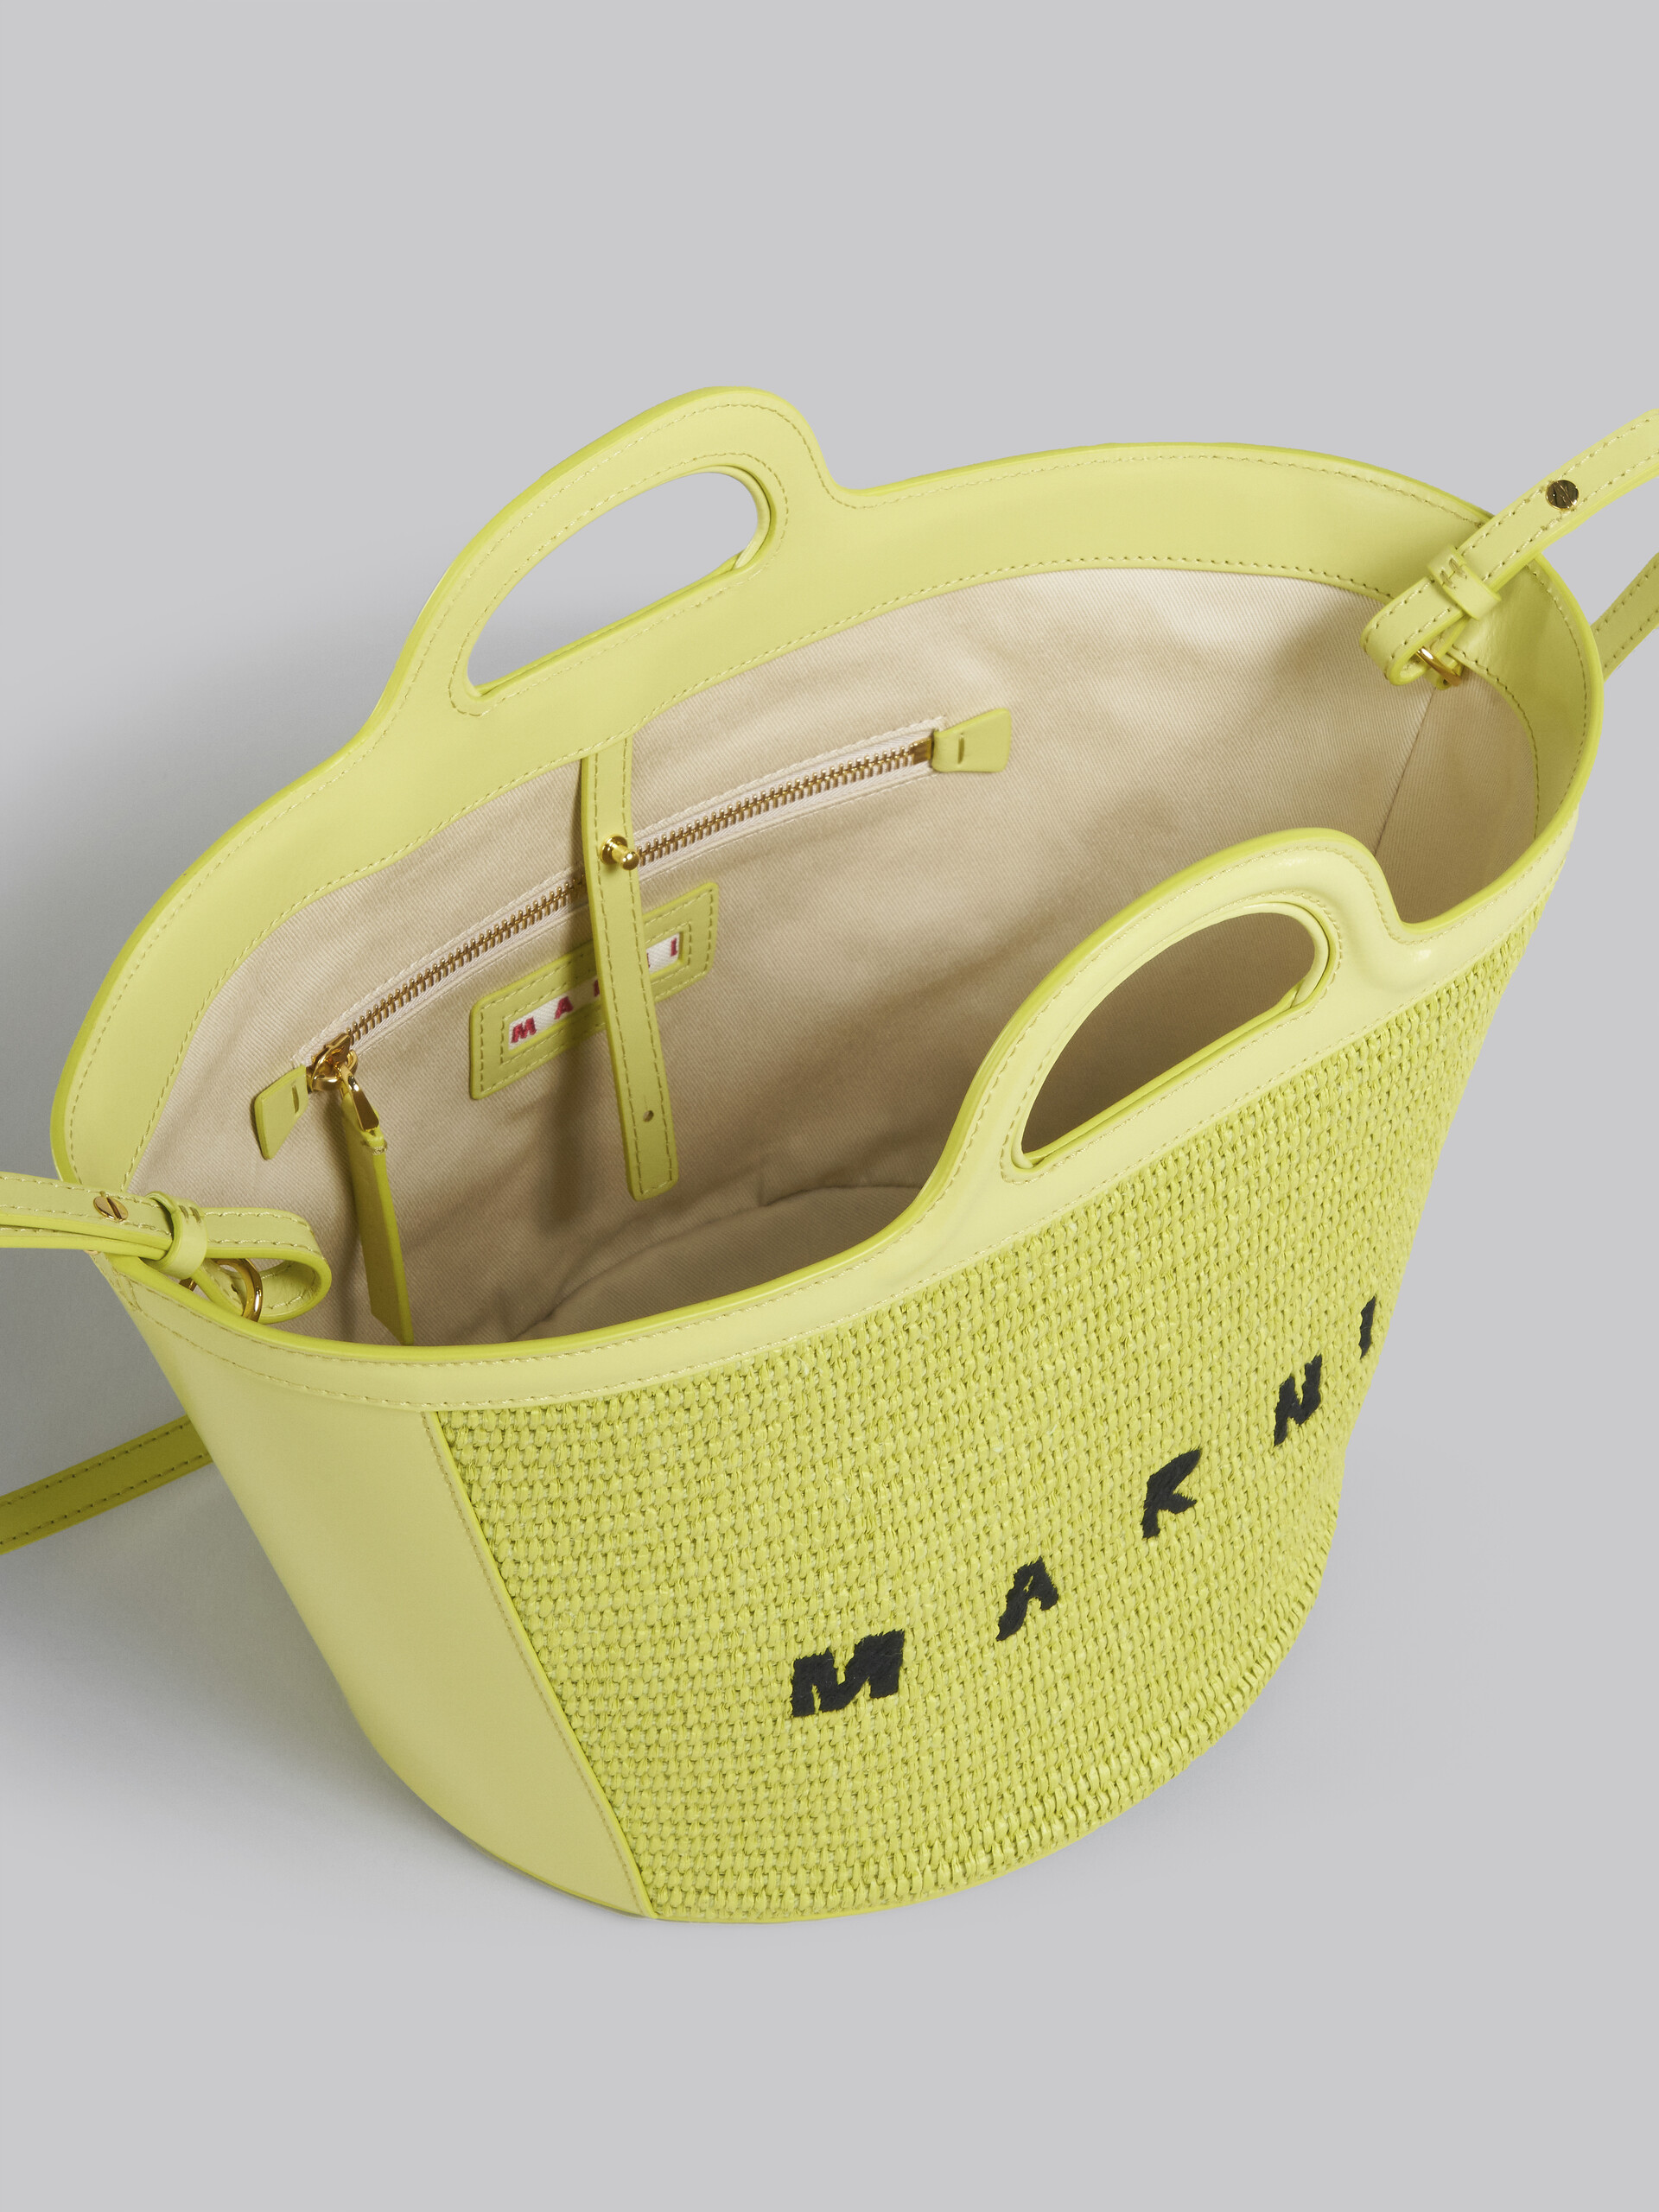 TROPICALIA small bag in yellow leather and raffia - Handbags - Image 4